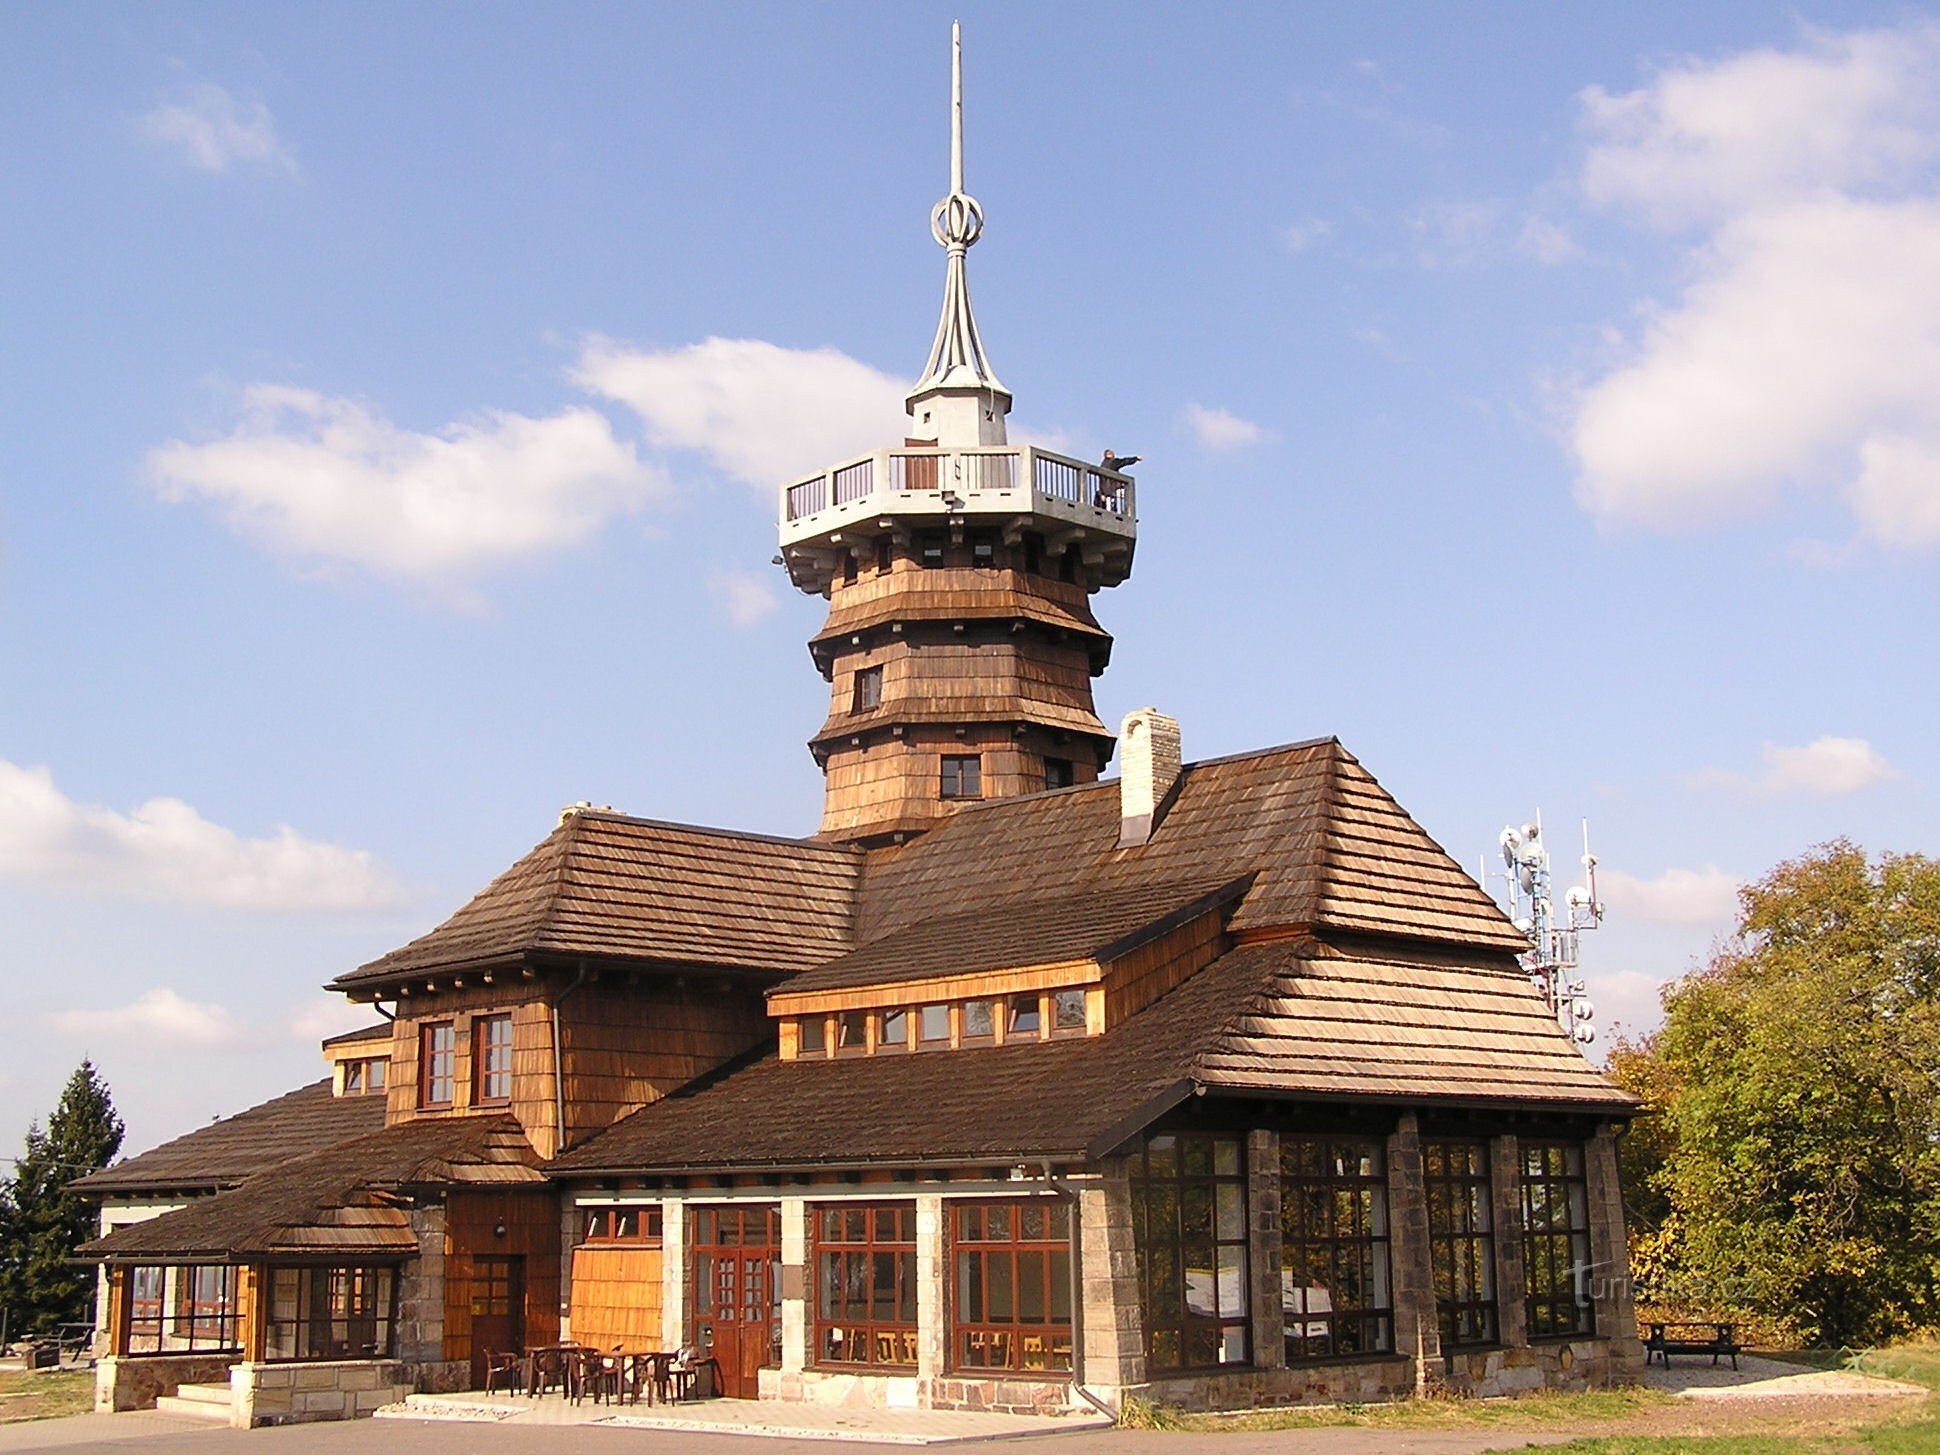 Touristenhütte von Jirásk in Dobrošov